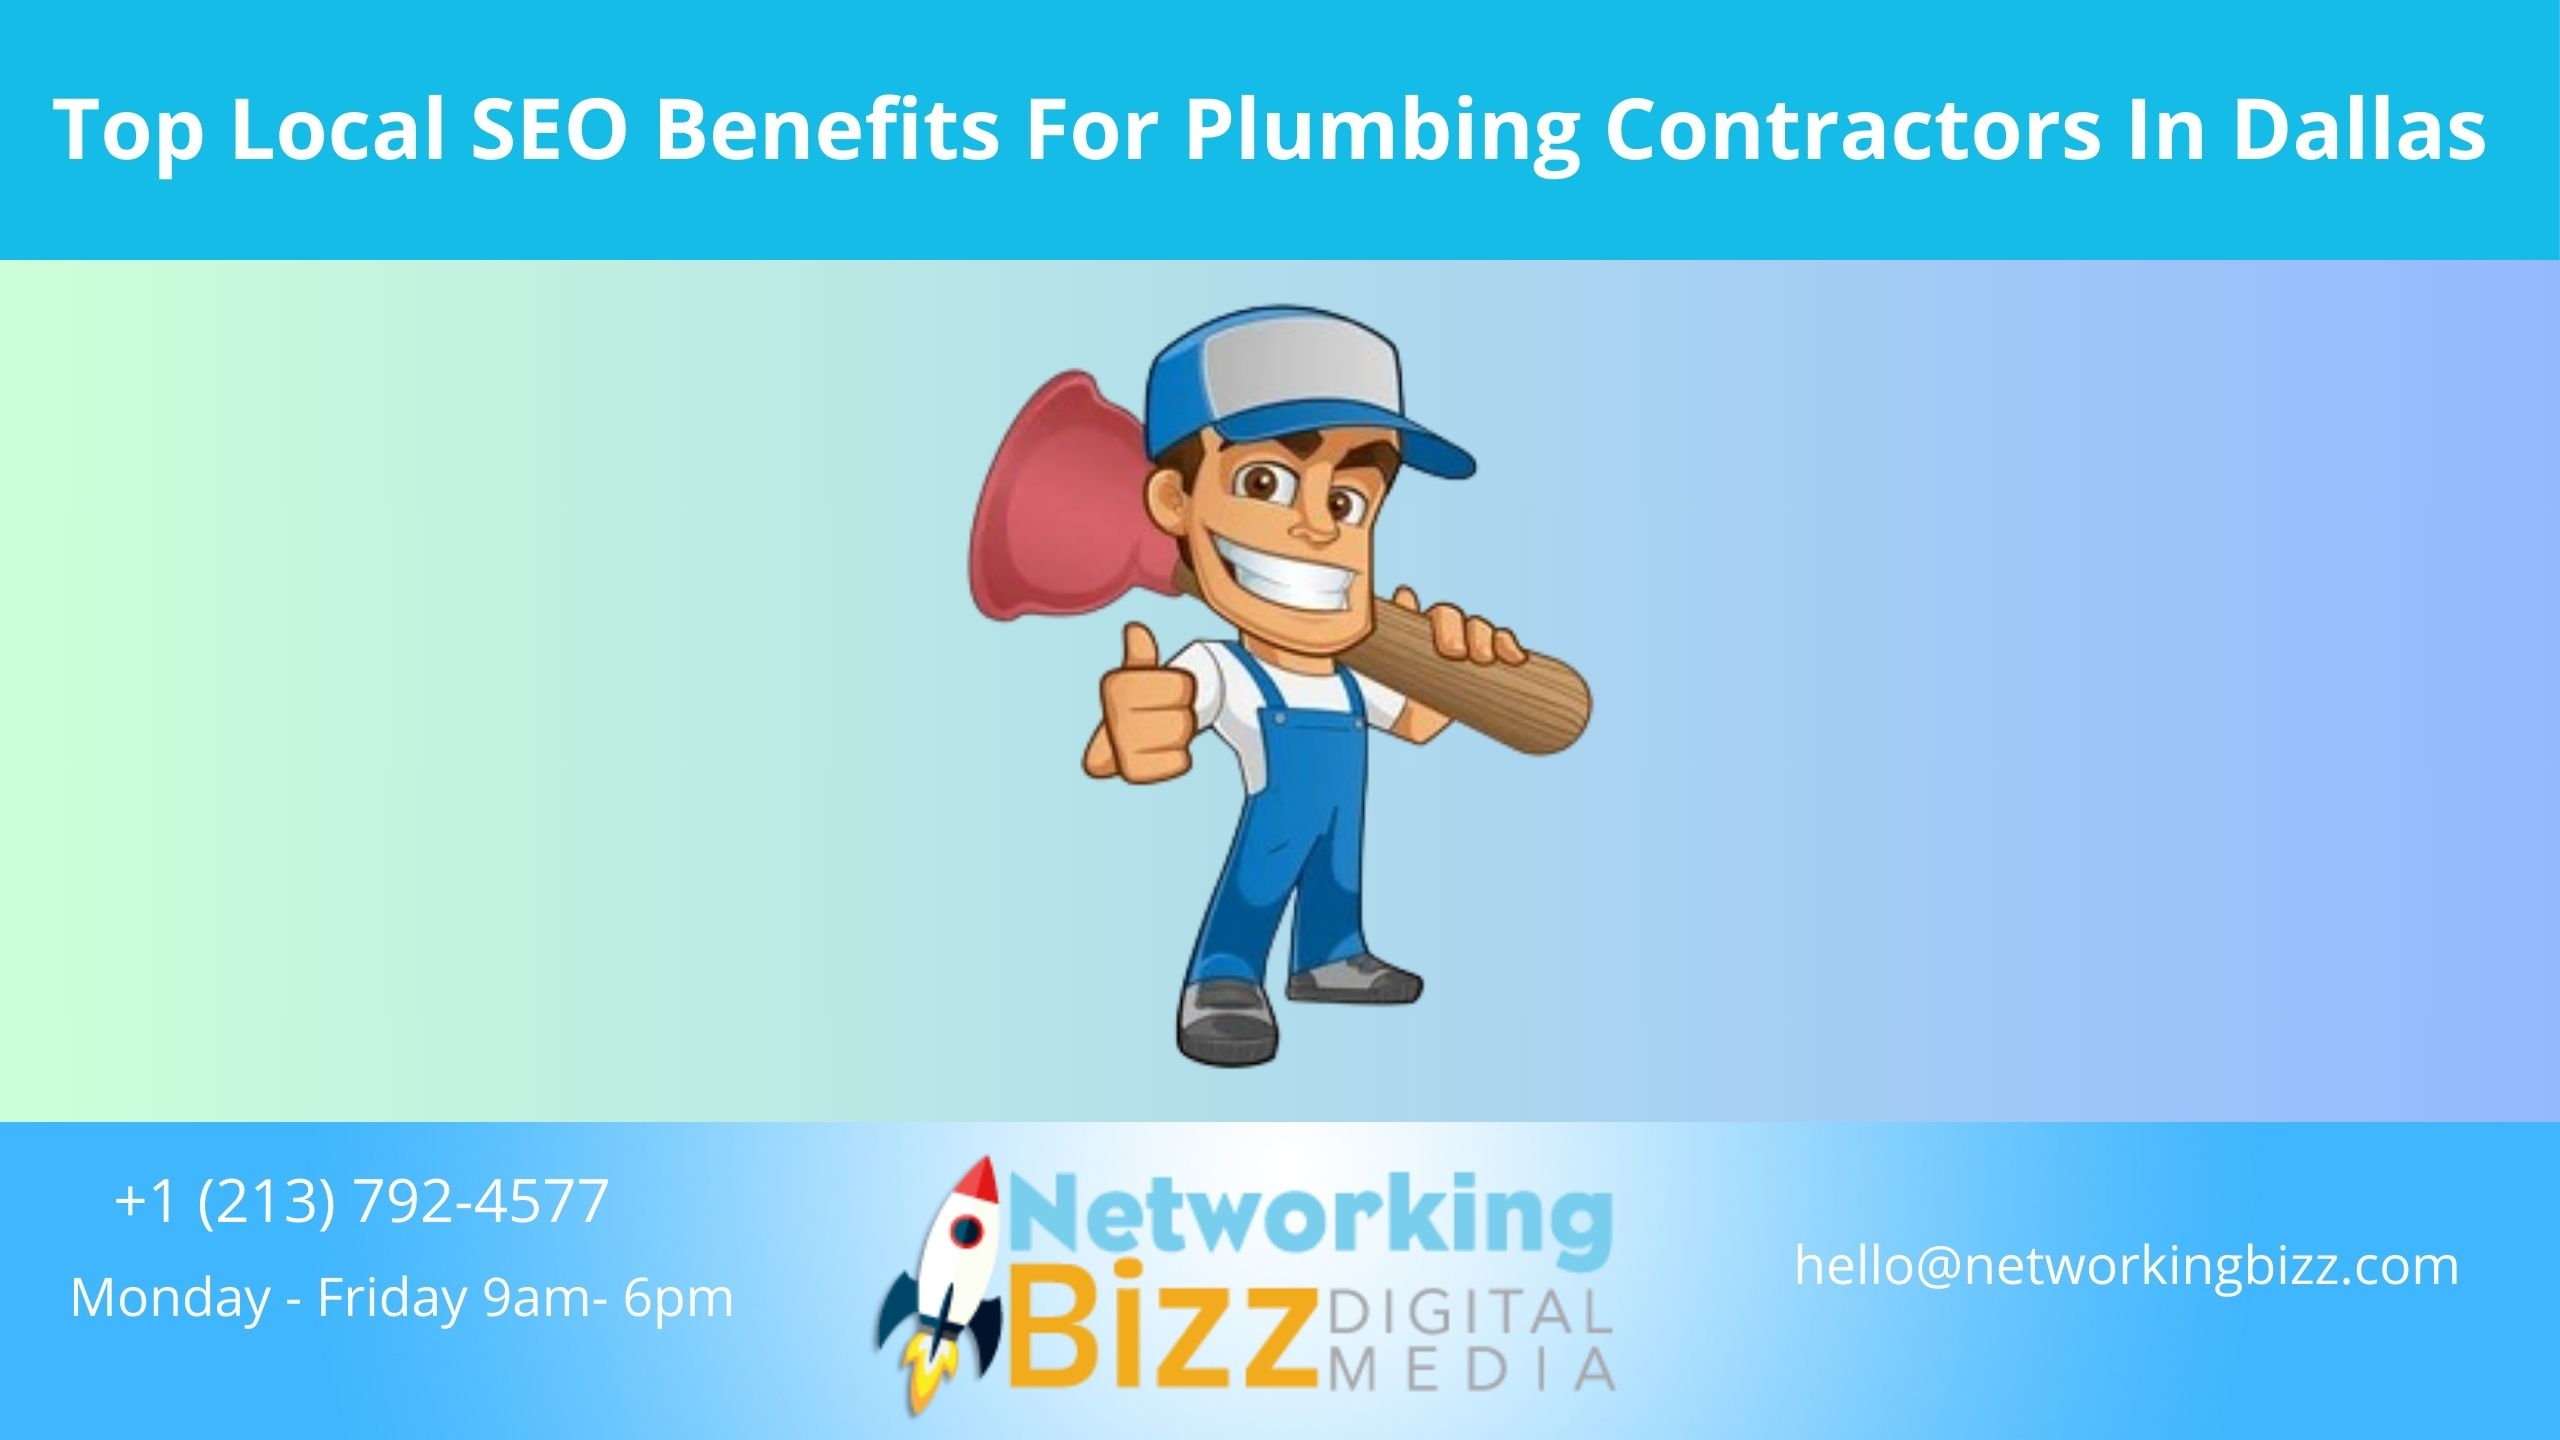 Top Local SEO Benefits For Plumbing Contractors In Dallas